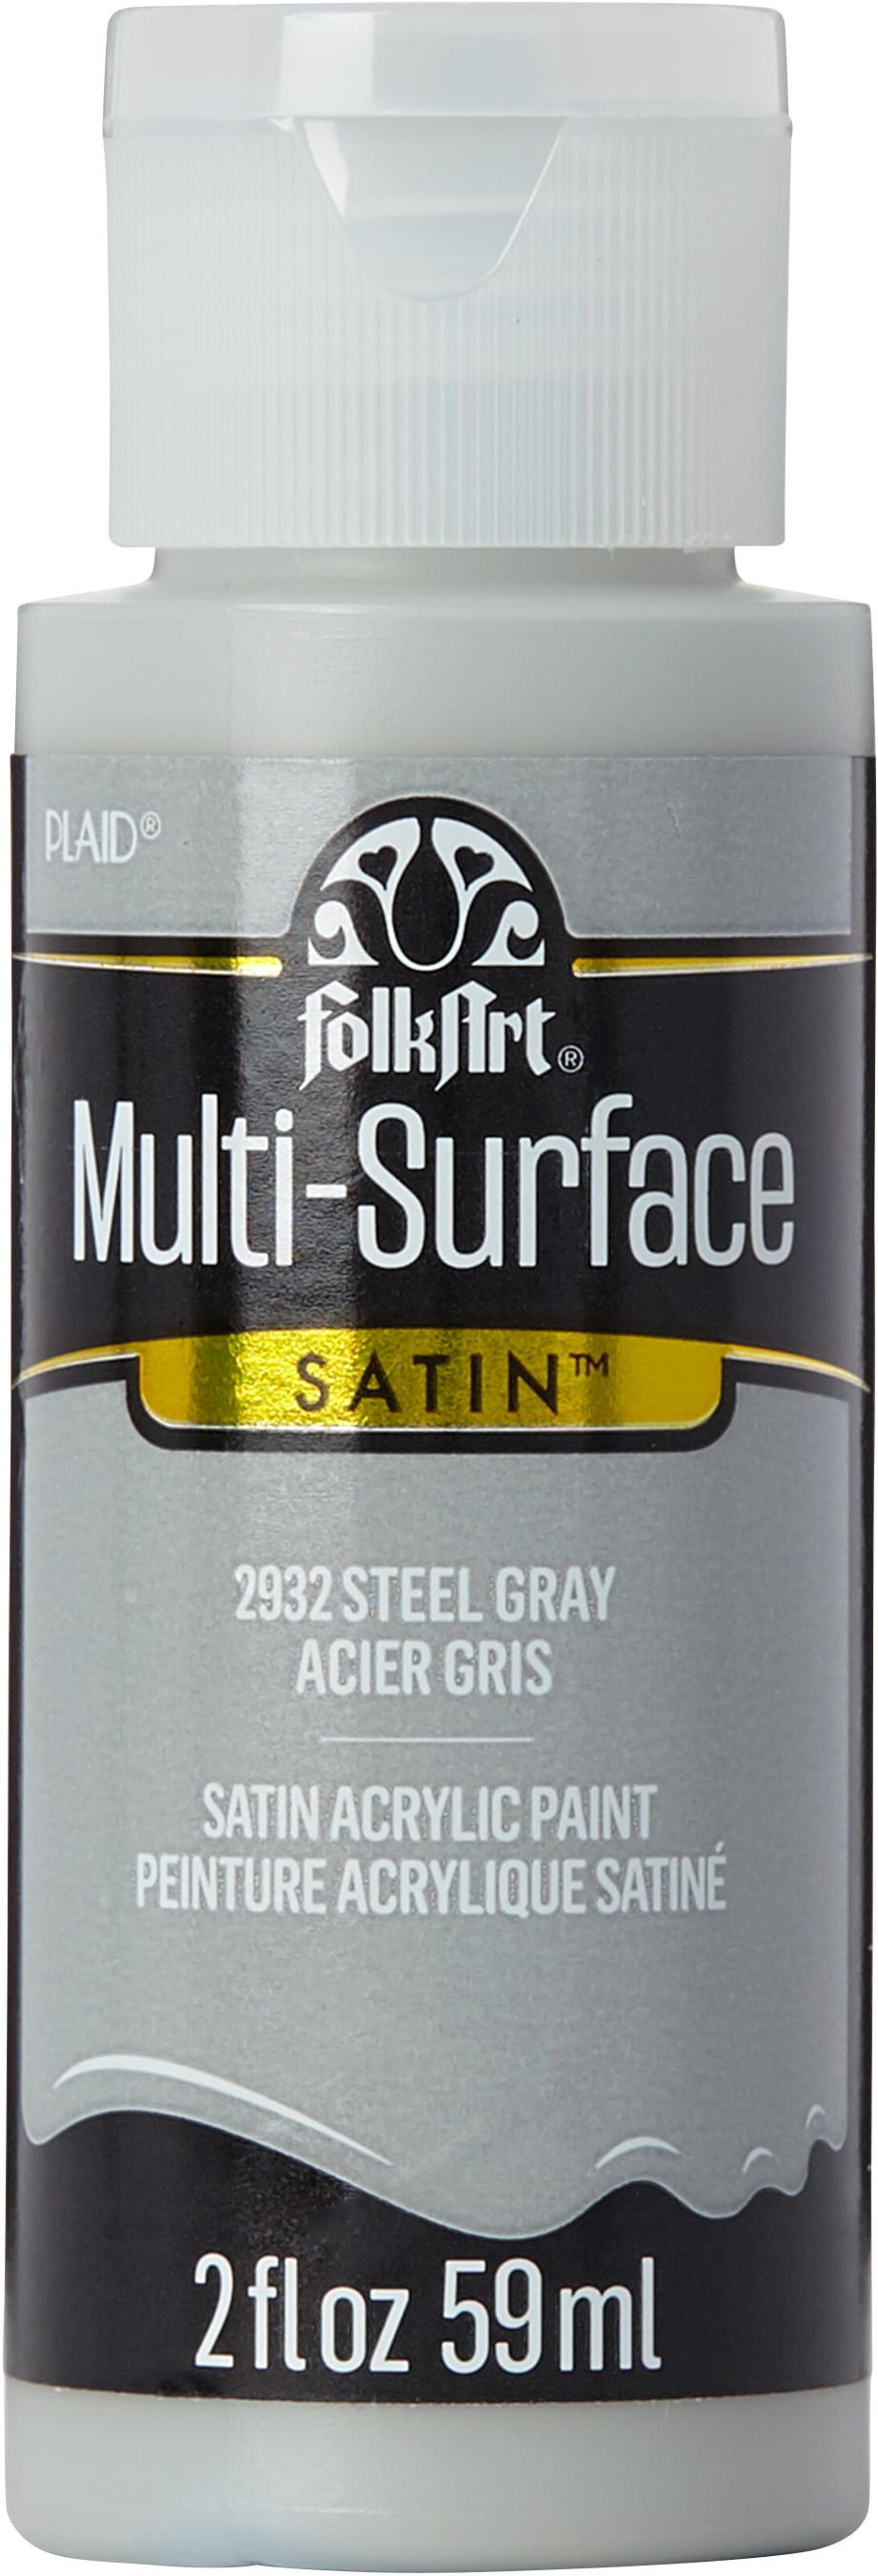 12 Pack: FolkArt® Multi-Surface Satin Acrylic Paint, 2oz. 